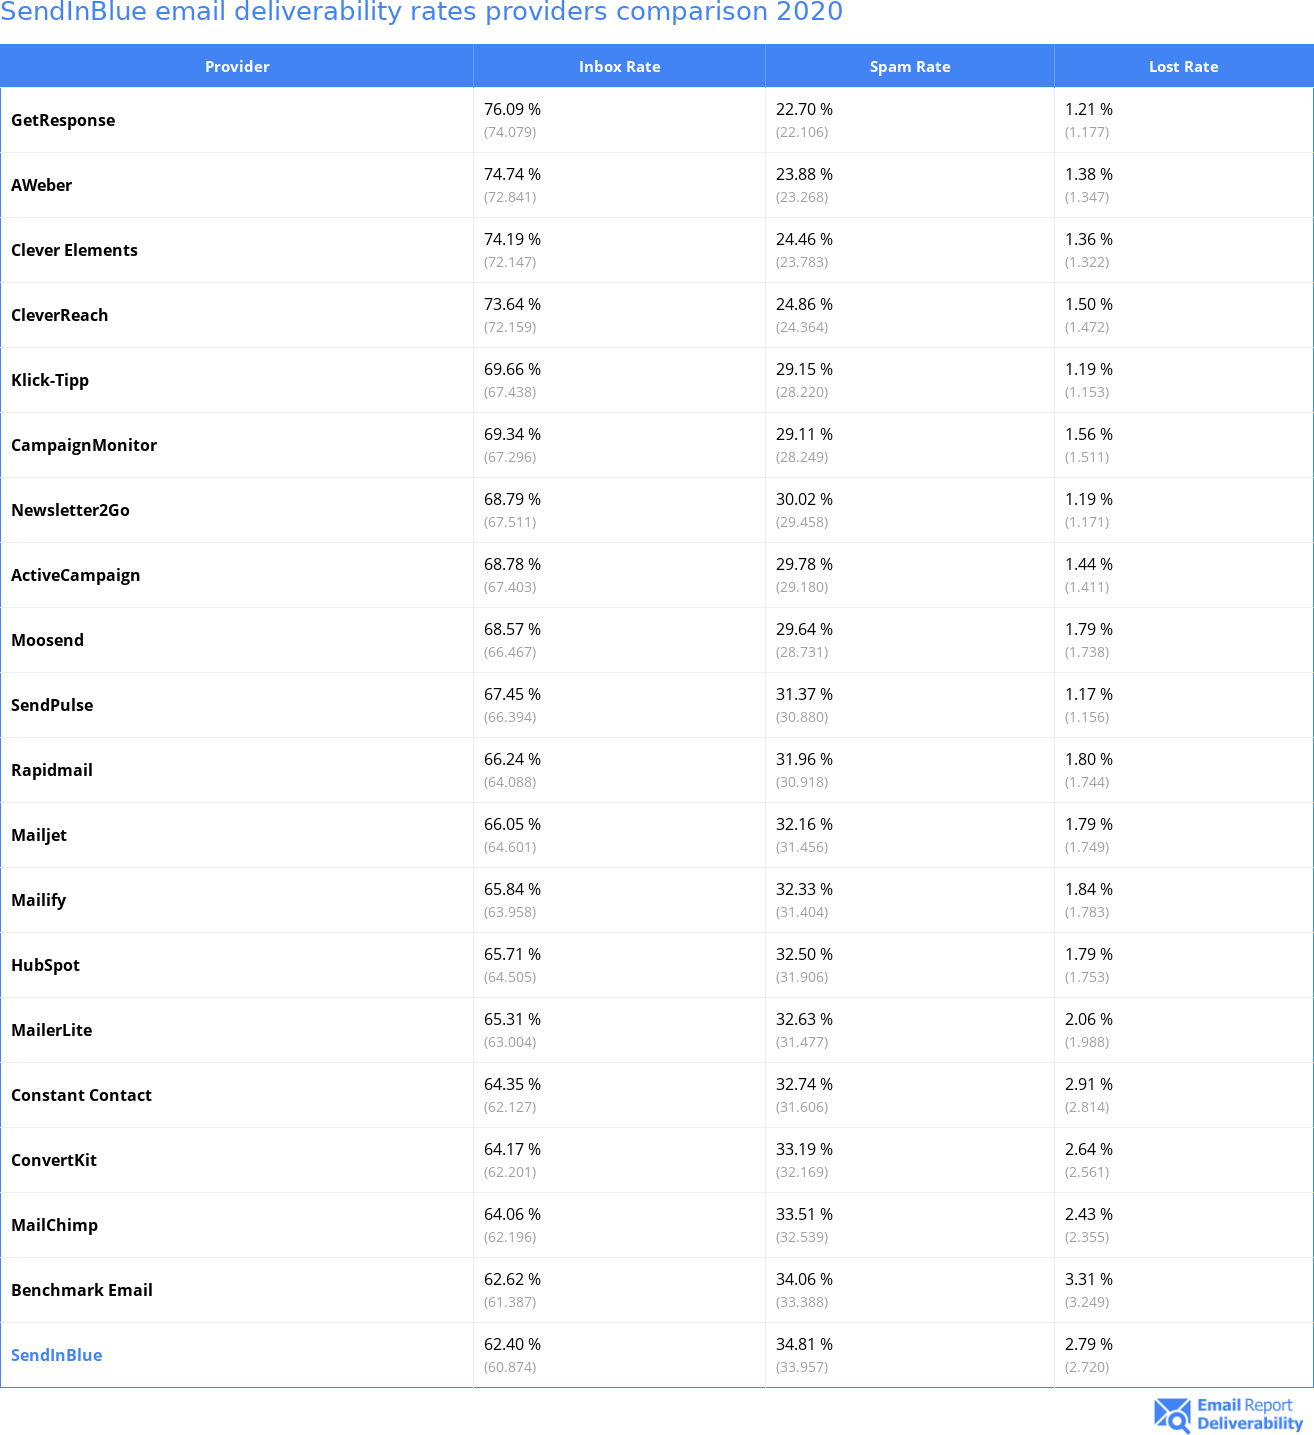 SendInBlue email deliverability rates providers comparison 2020